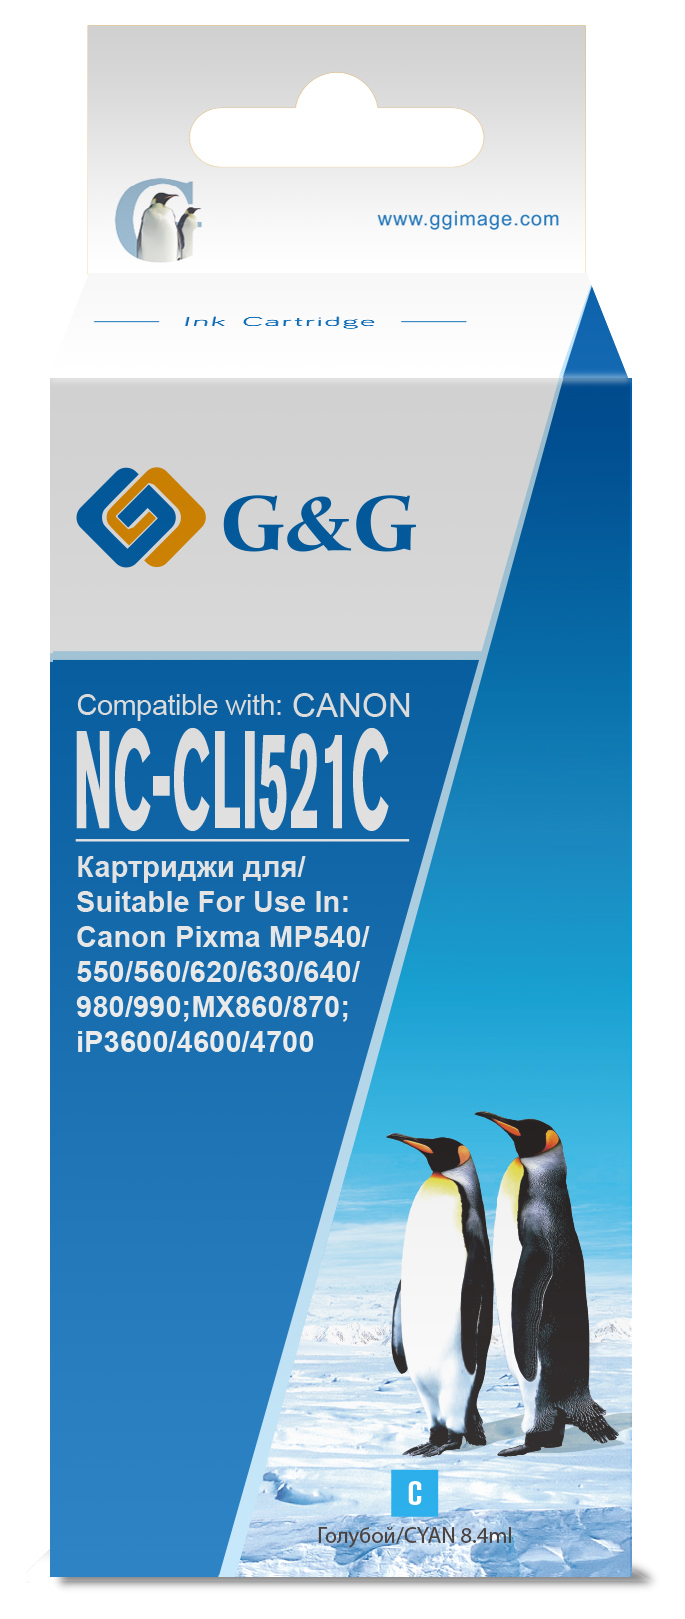 nc-cli521c_1